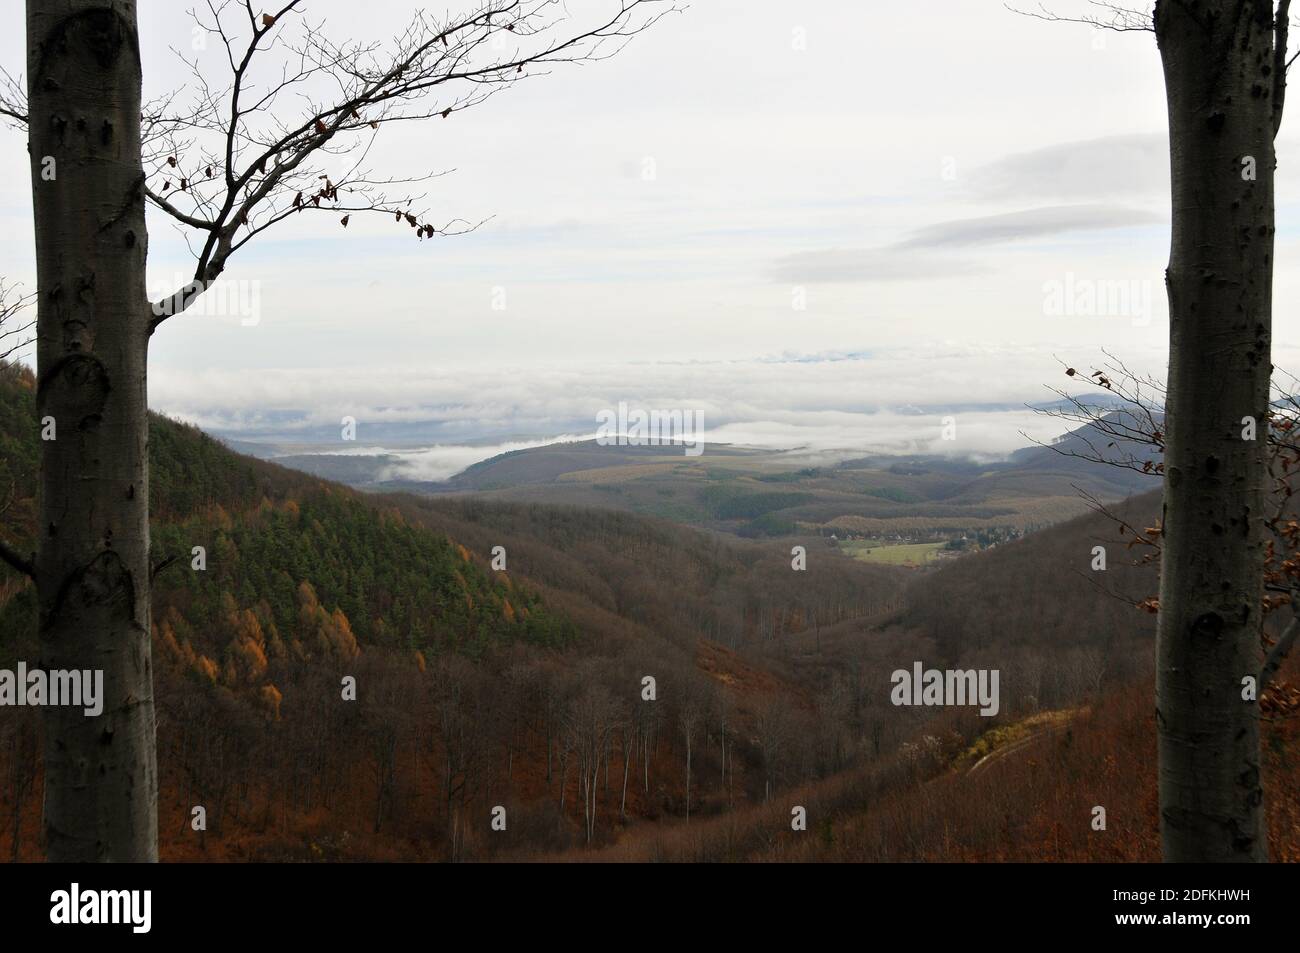 Matra mountain hi-res stock photography and images - Alamy